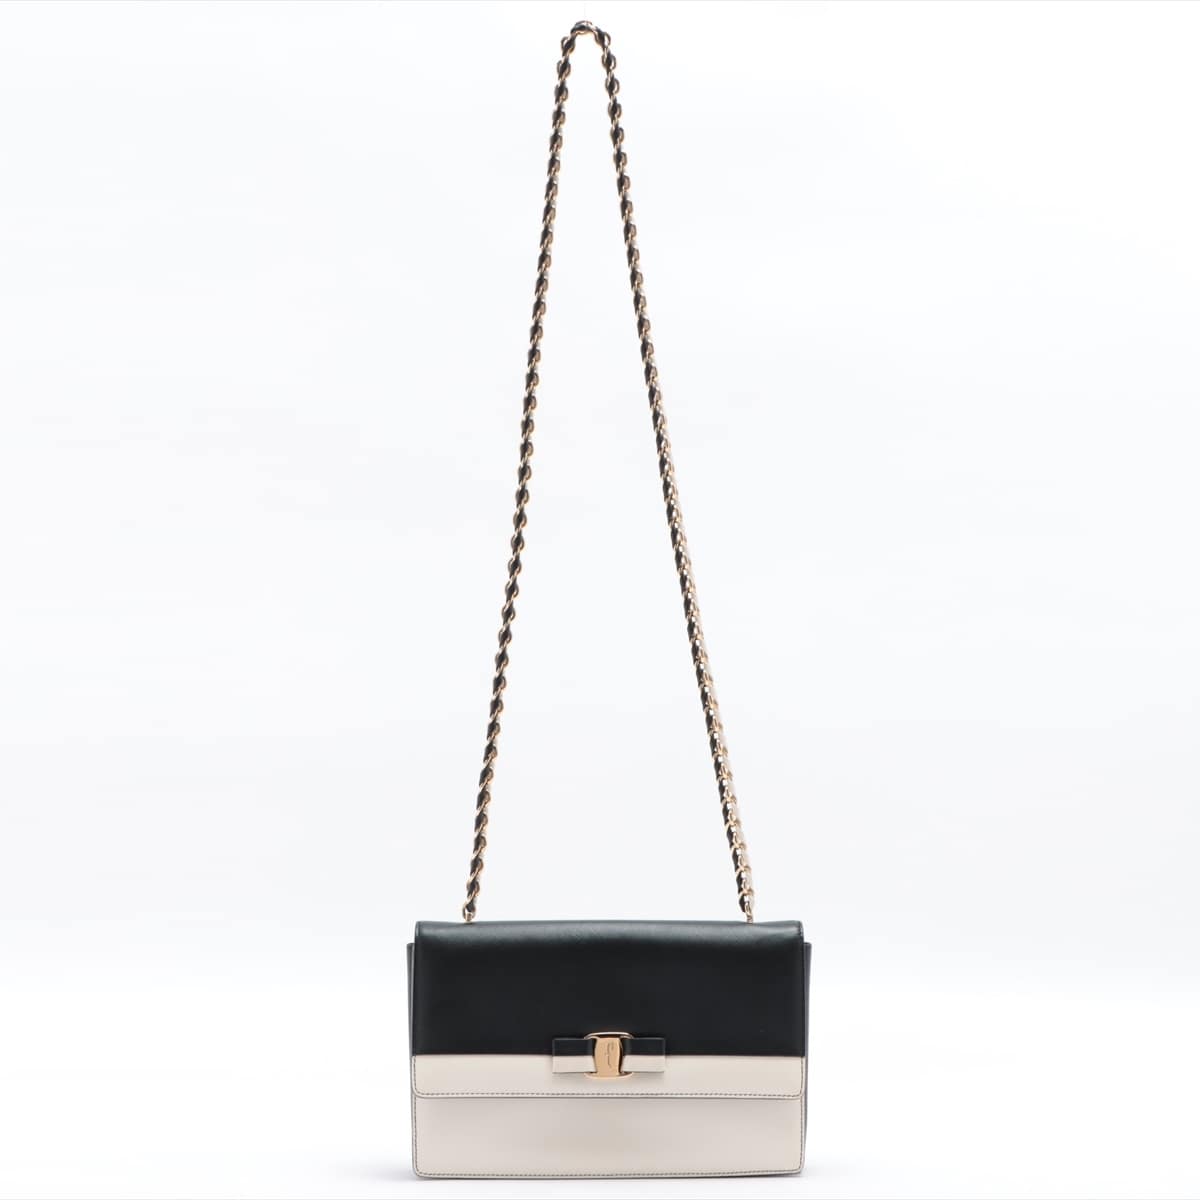 Ferragamo Vara bow Leather Chain shoulder bag Black × White